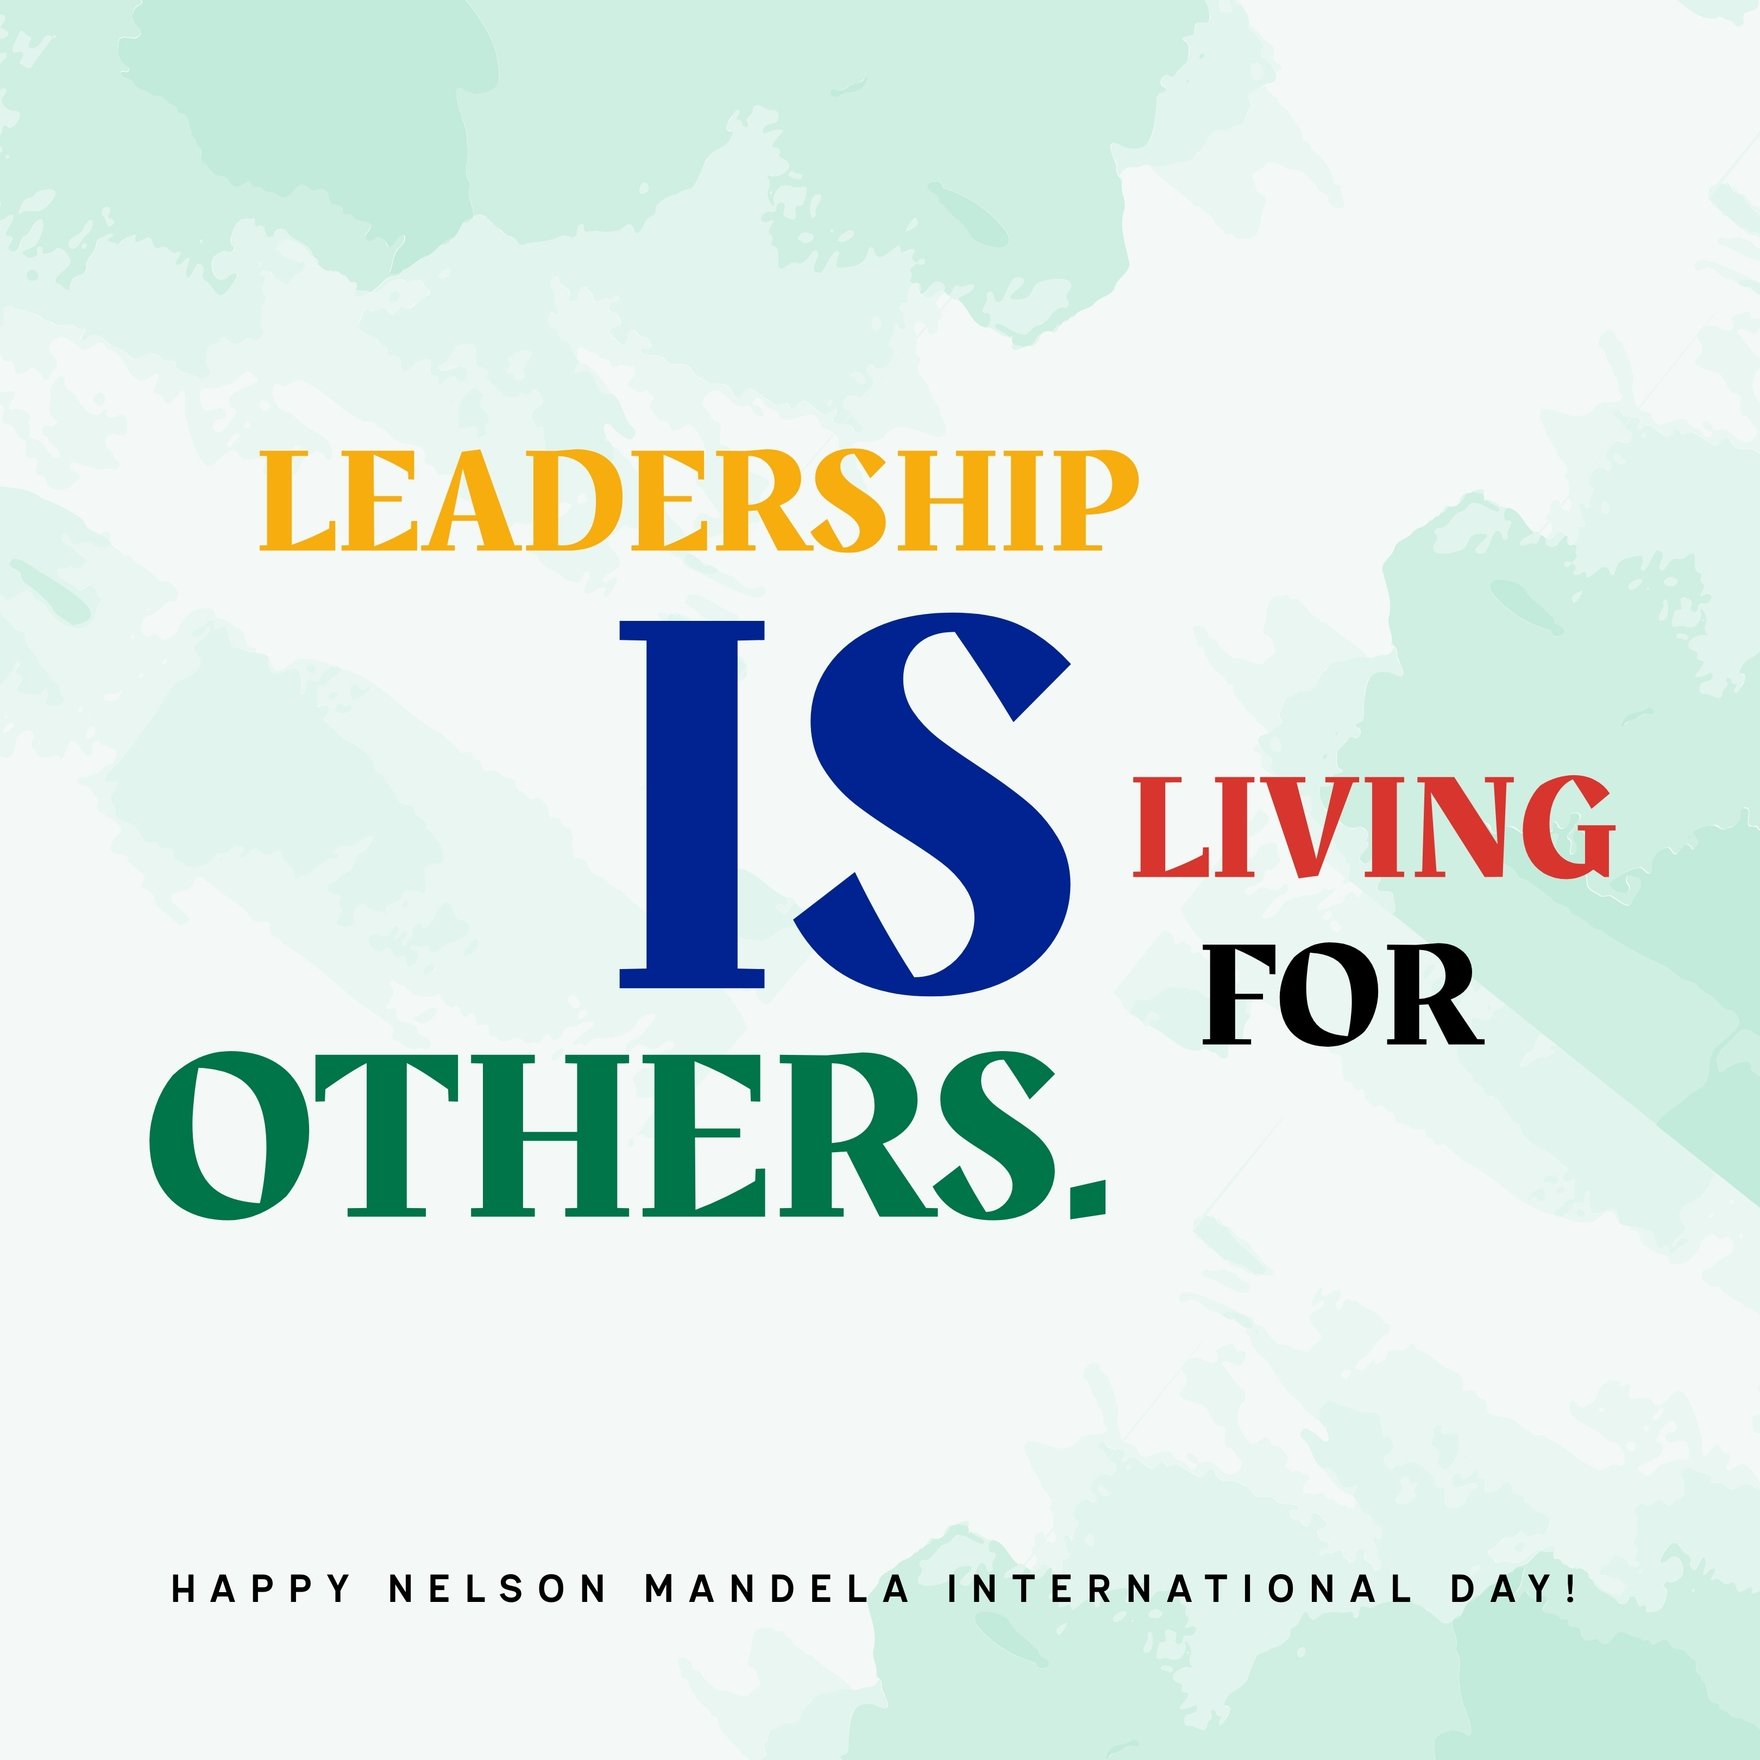 Nelson Mandela International Day Instagram Post